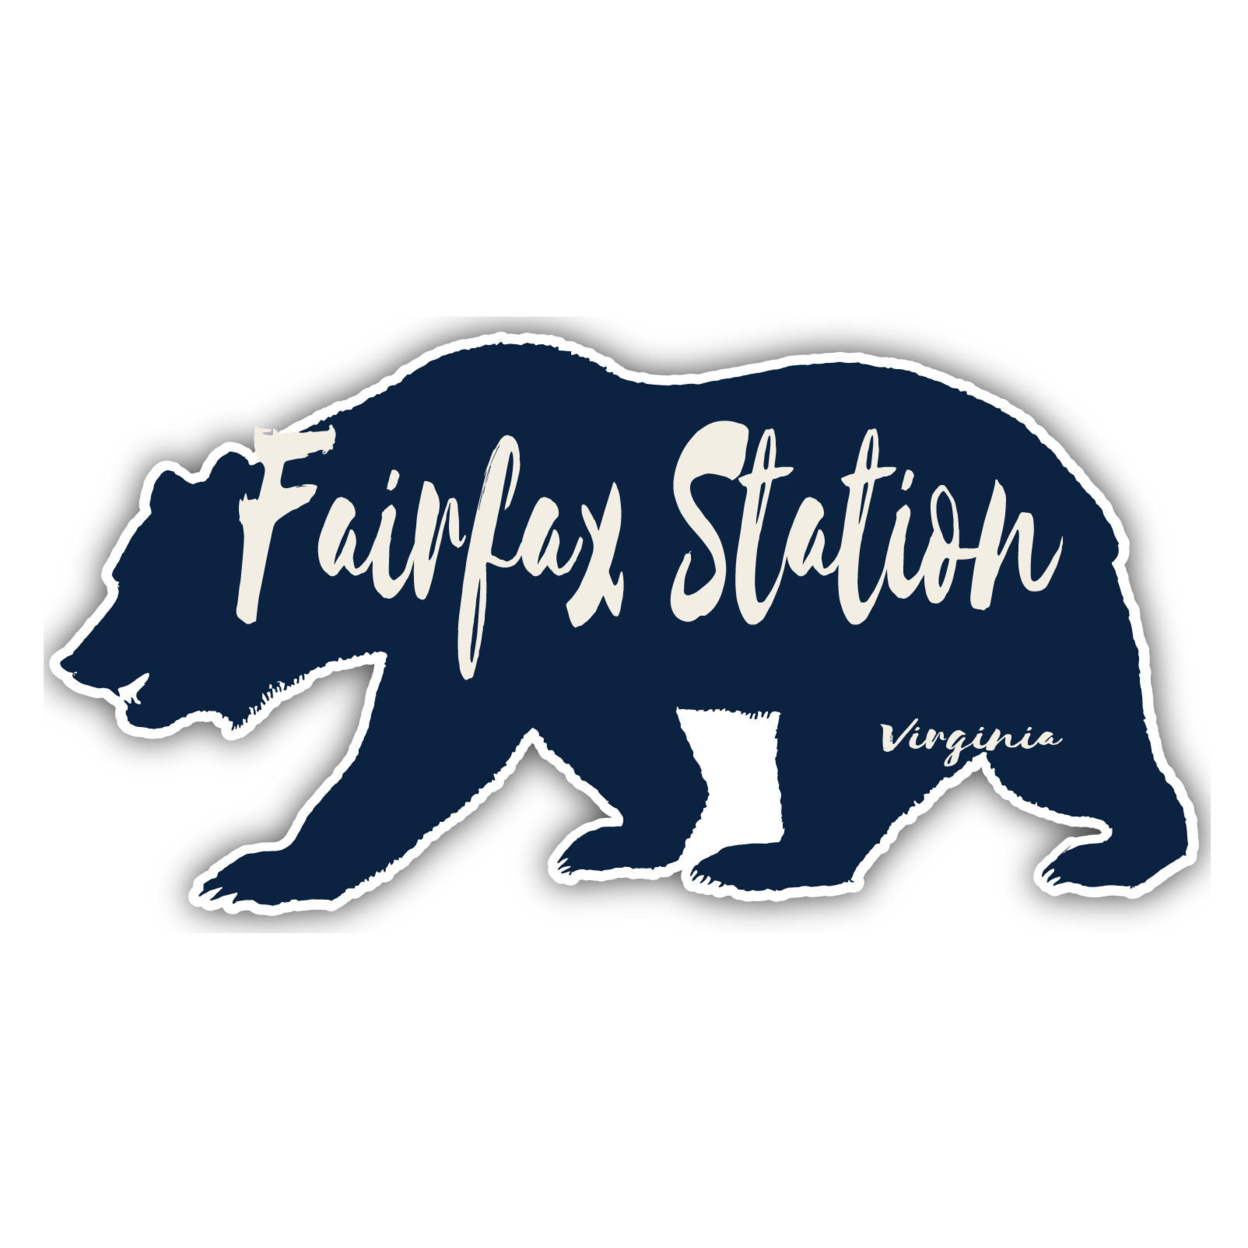 Fairfax Station Virginia Souvenir Decorative Stickers (Choose Theme And Size) - Single Unit, 6-Inch, Bear